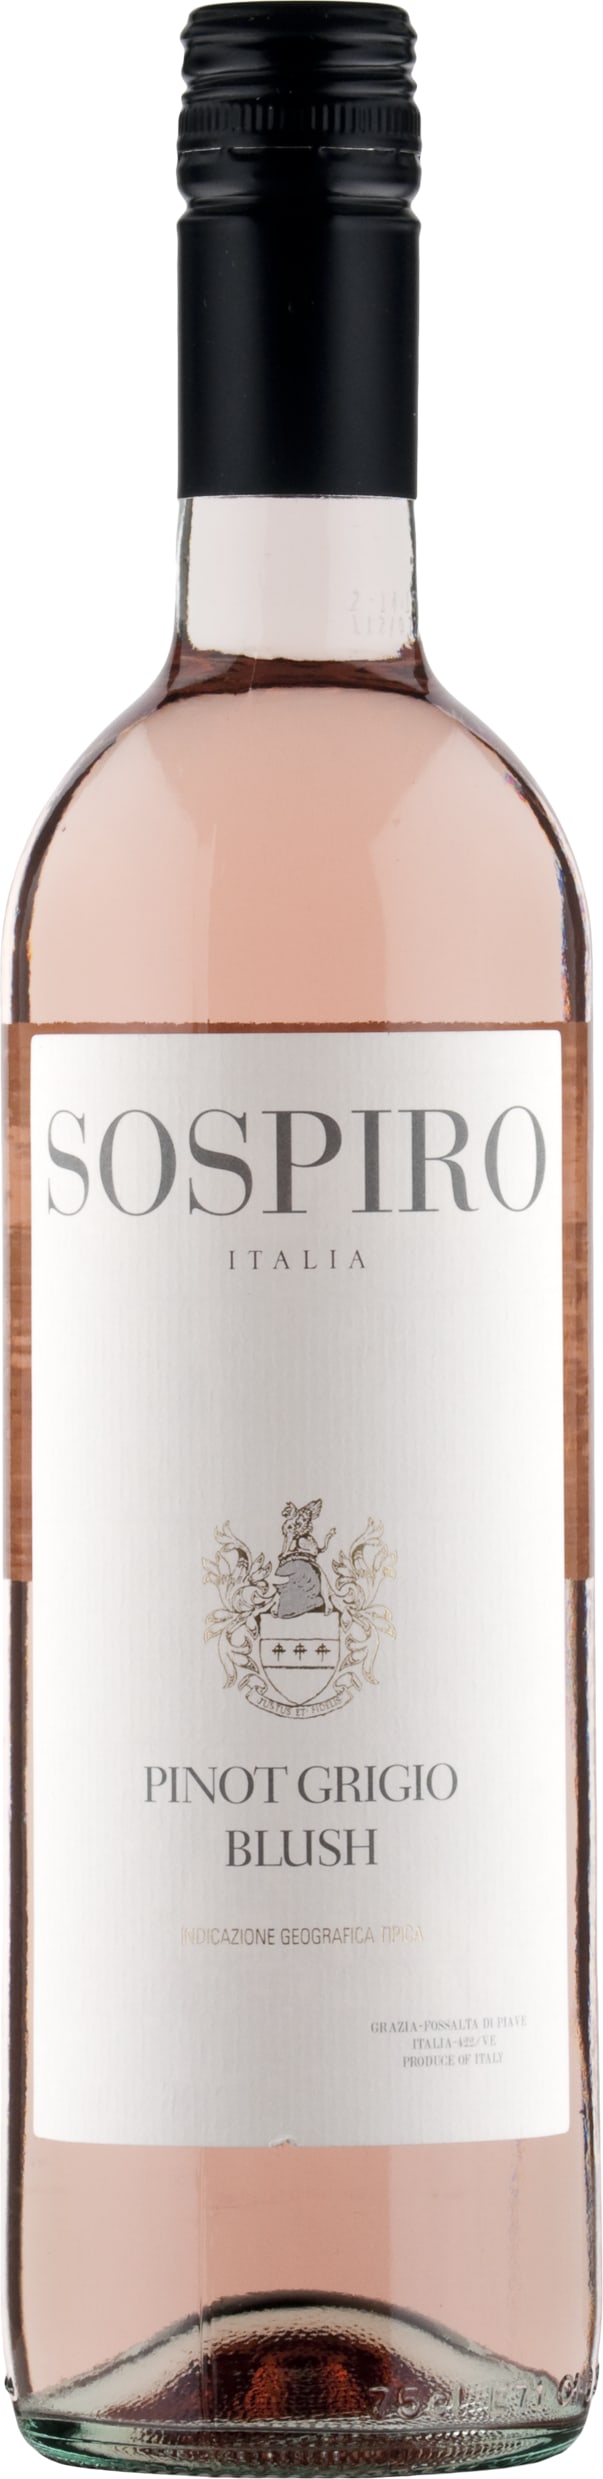 Pinot Grigio Blush 23 Il Sospiro 75cl - Buy Sospiro Wines from GREAT WINES DIRECT wine shop